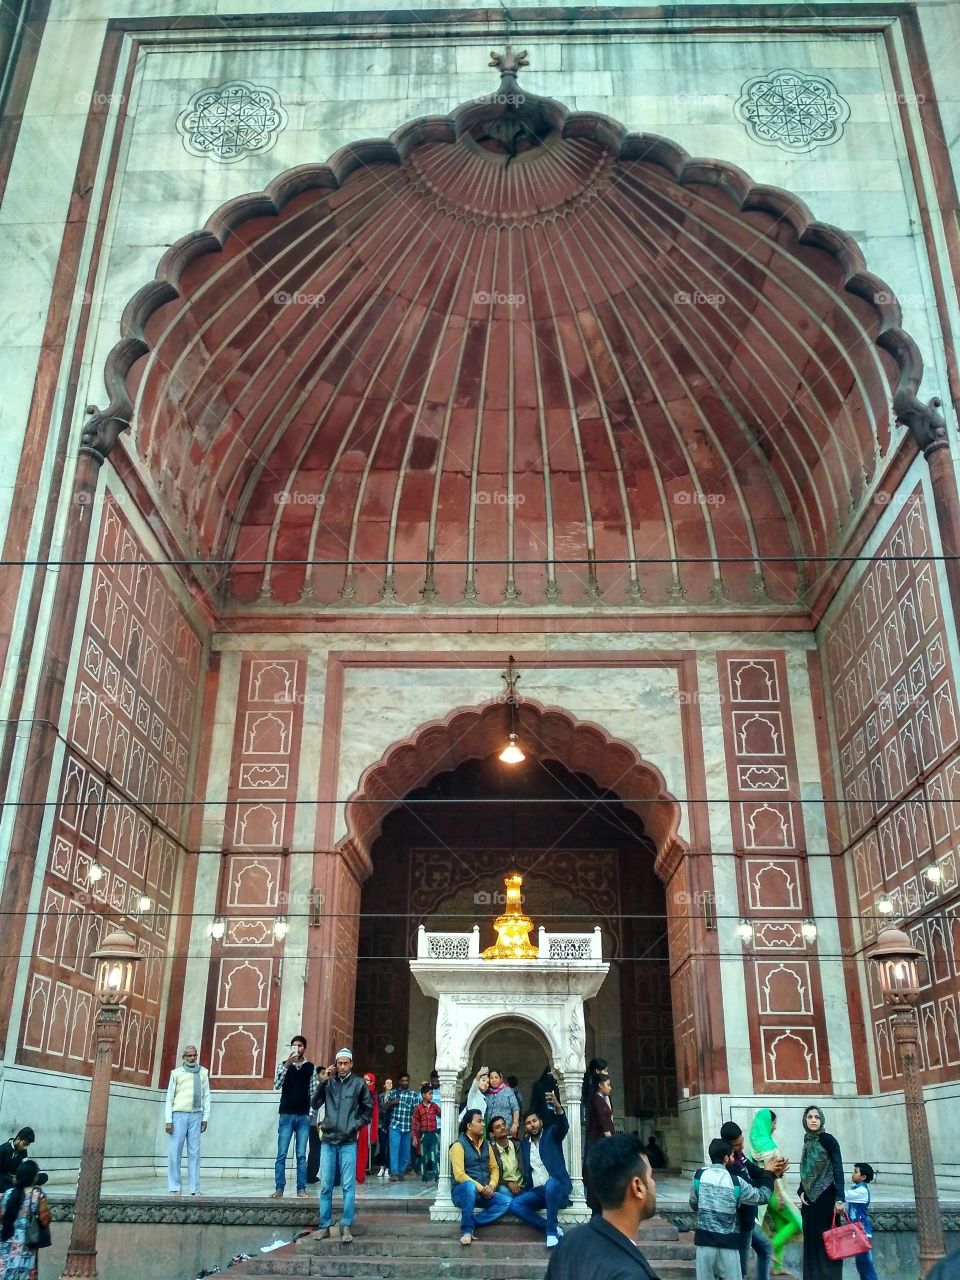 Jama masjid entry gate